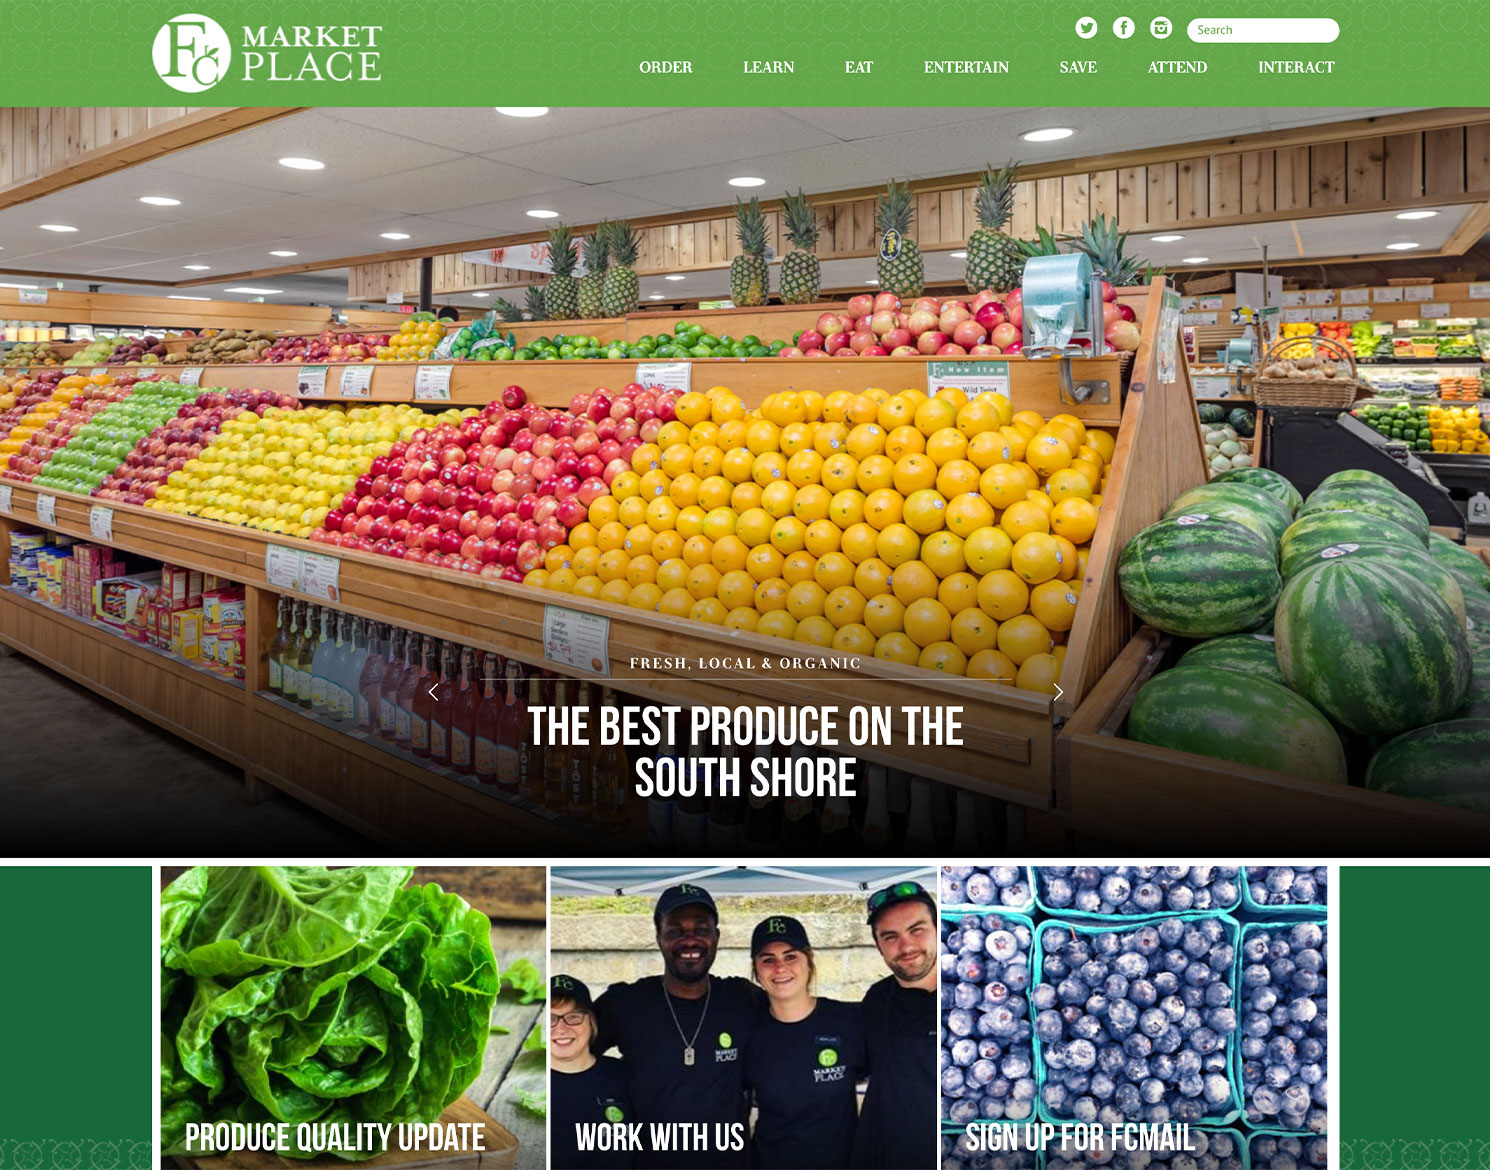 Fruit Center Market Place website homepage